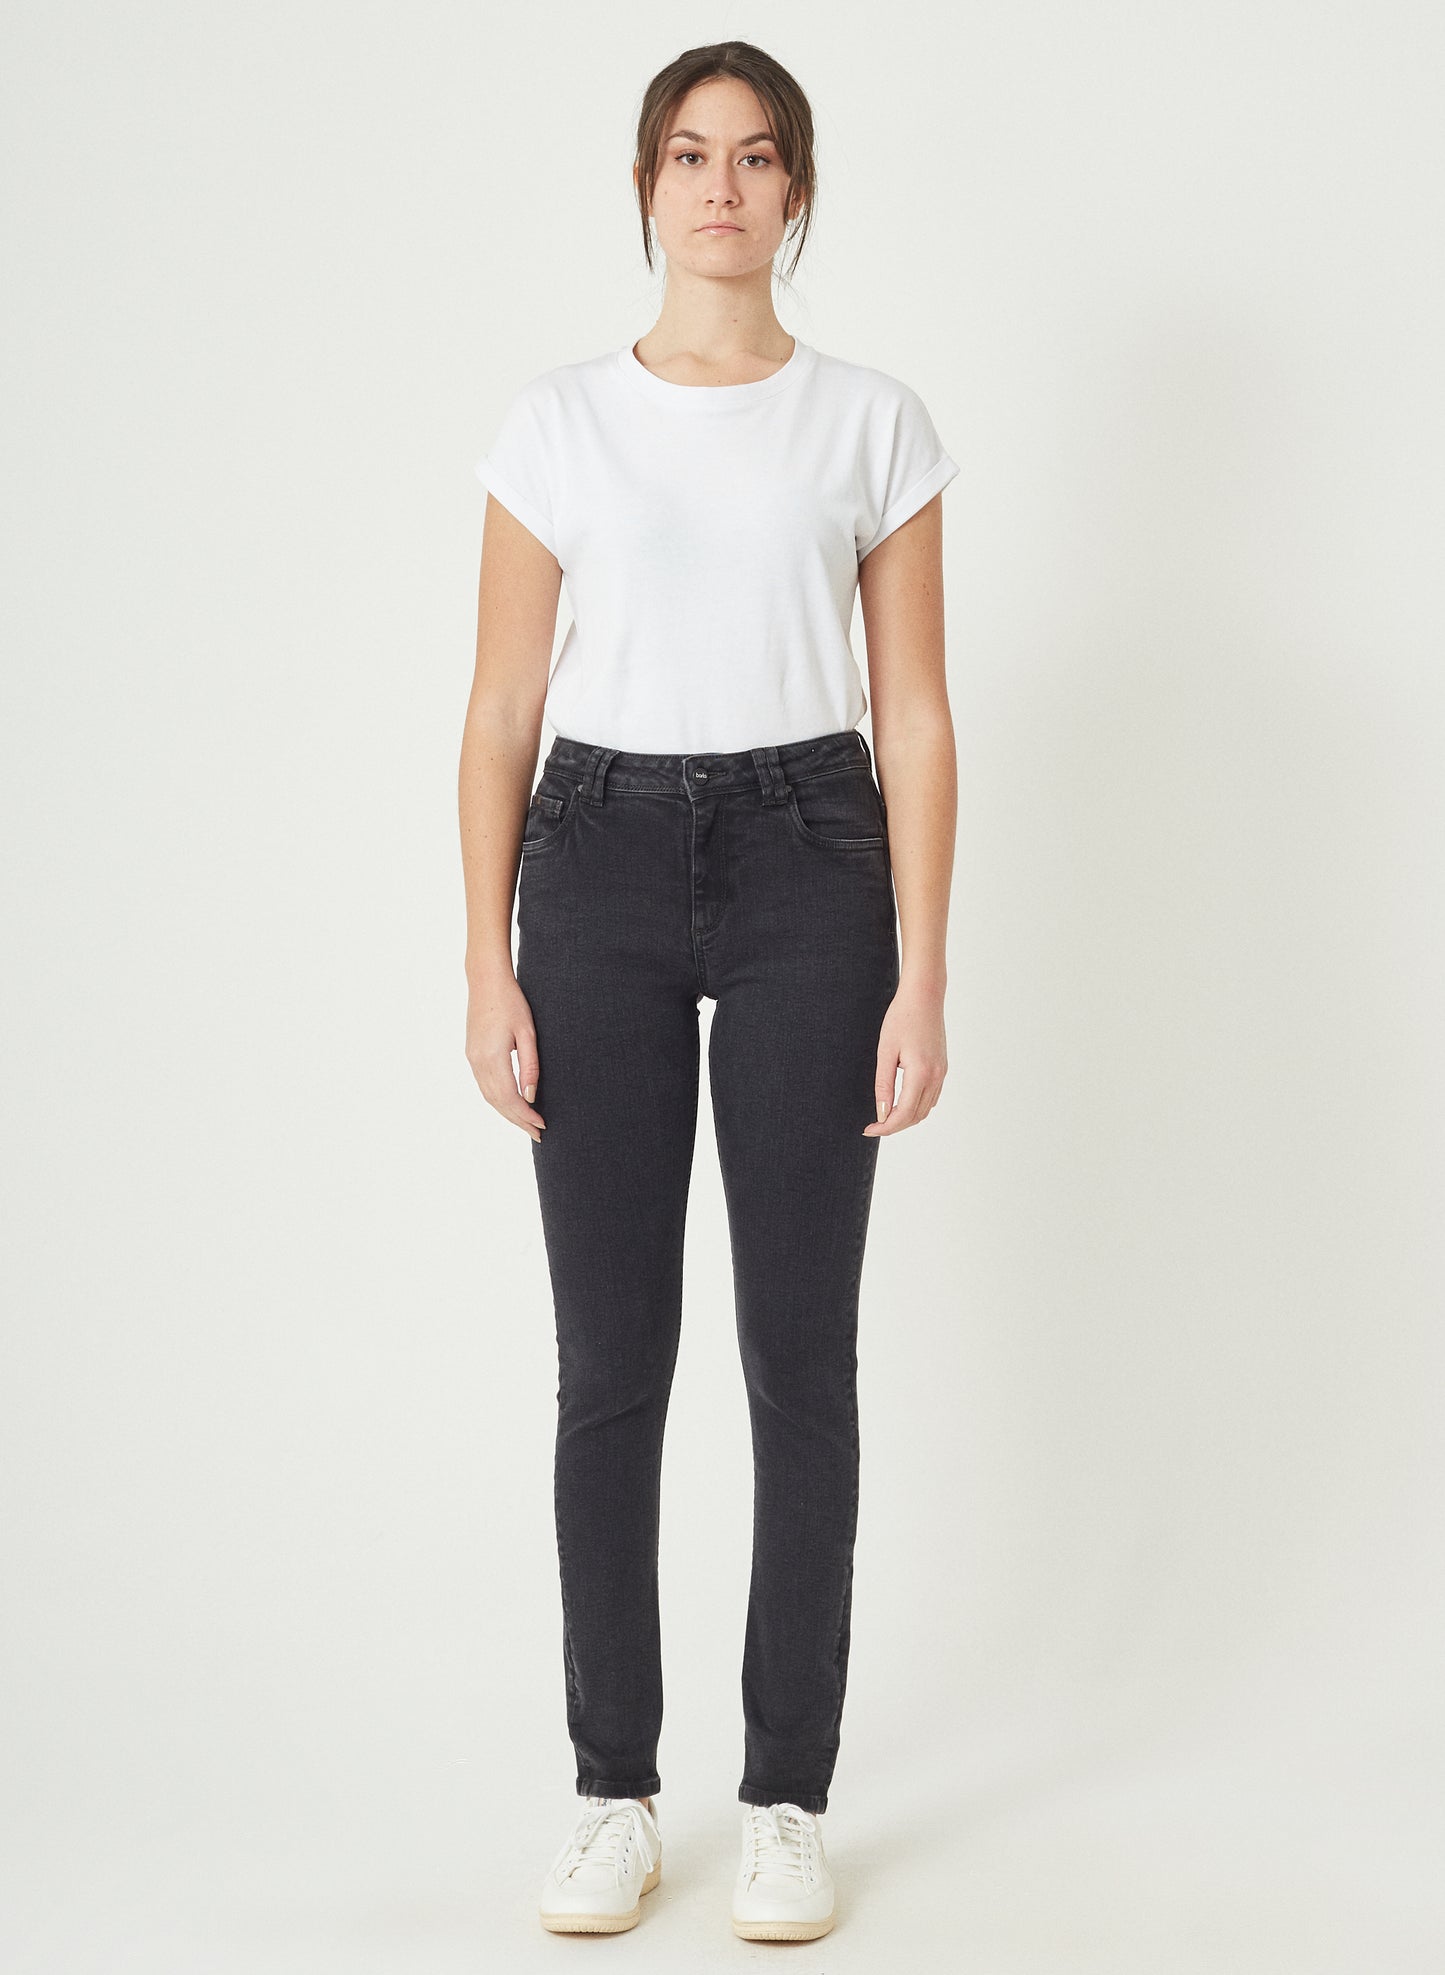 MINA - Slim Fit Denim Jeans Pant - Black Denim